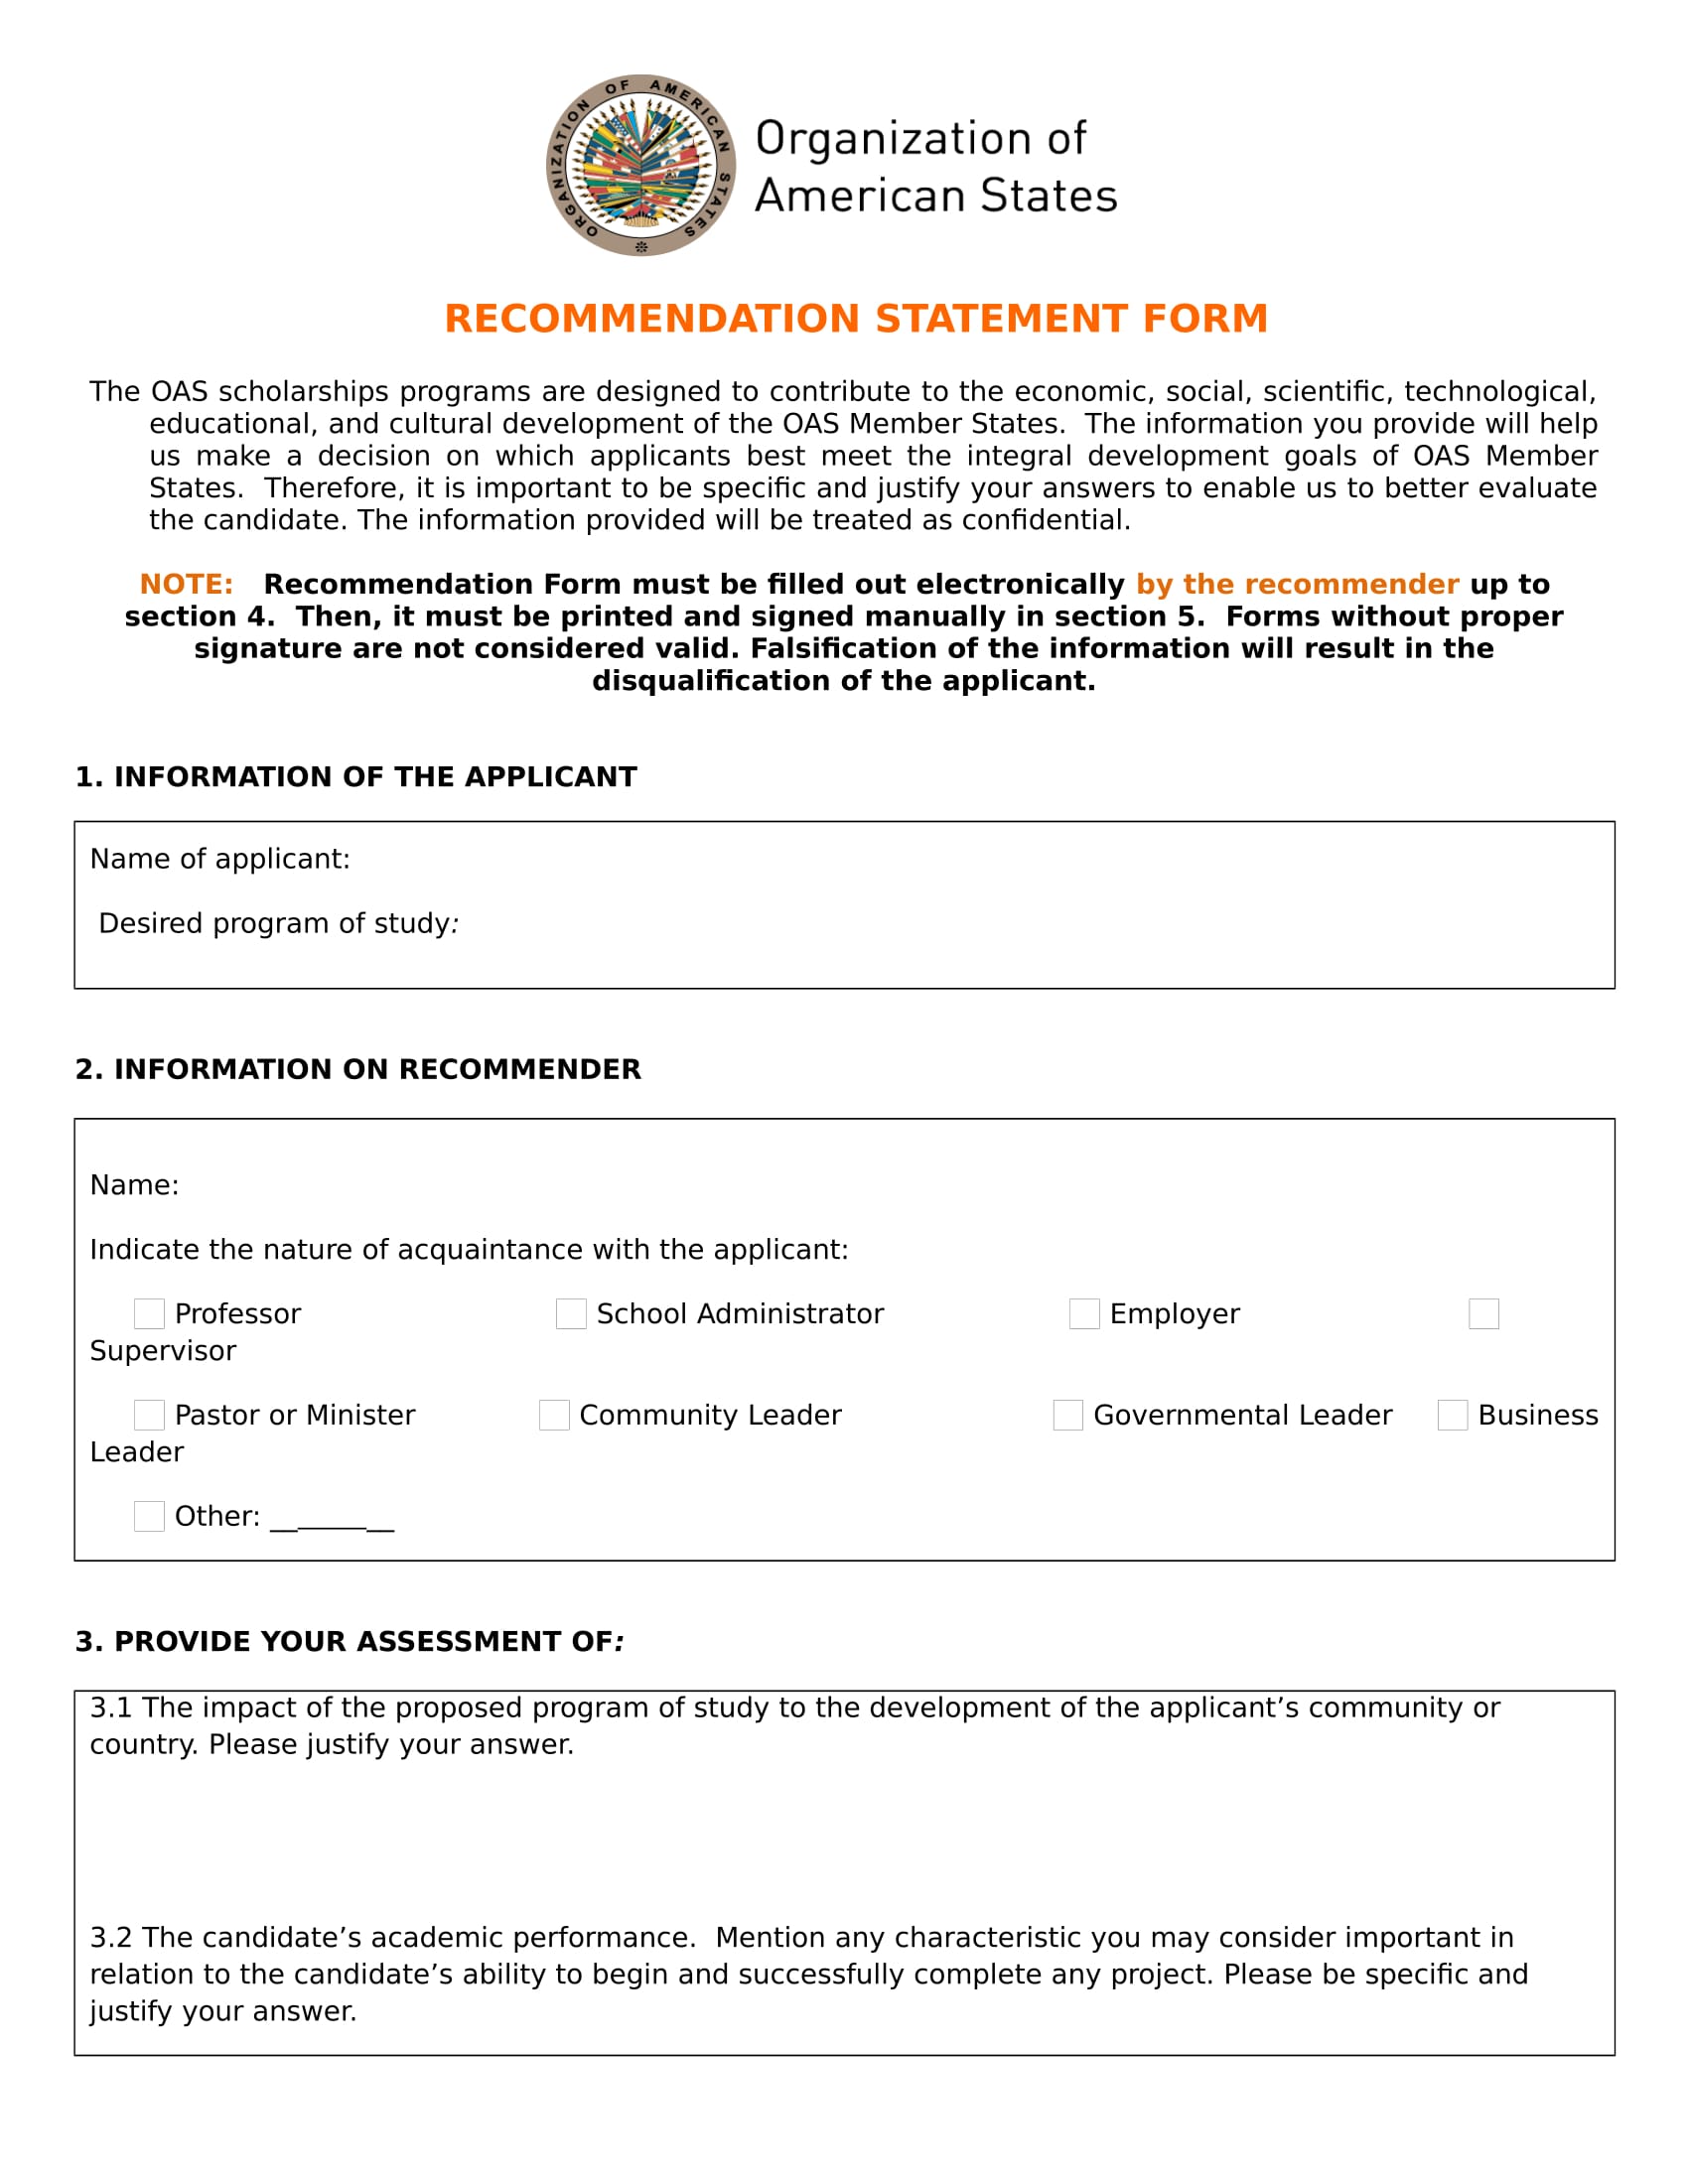 recommendation statement form sample 1